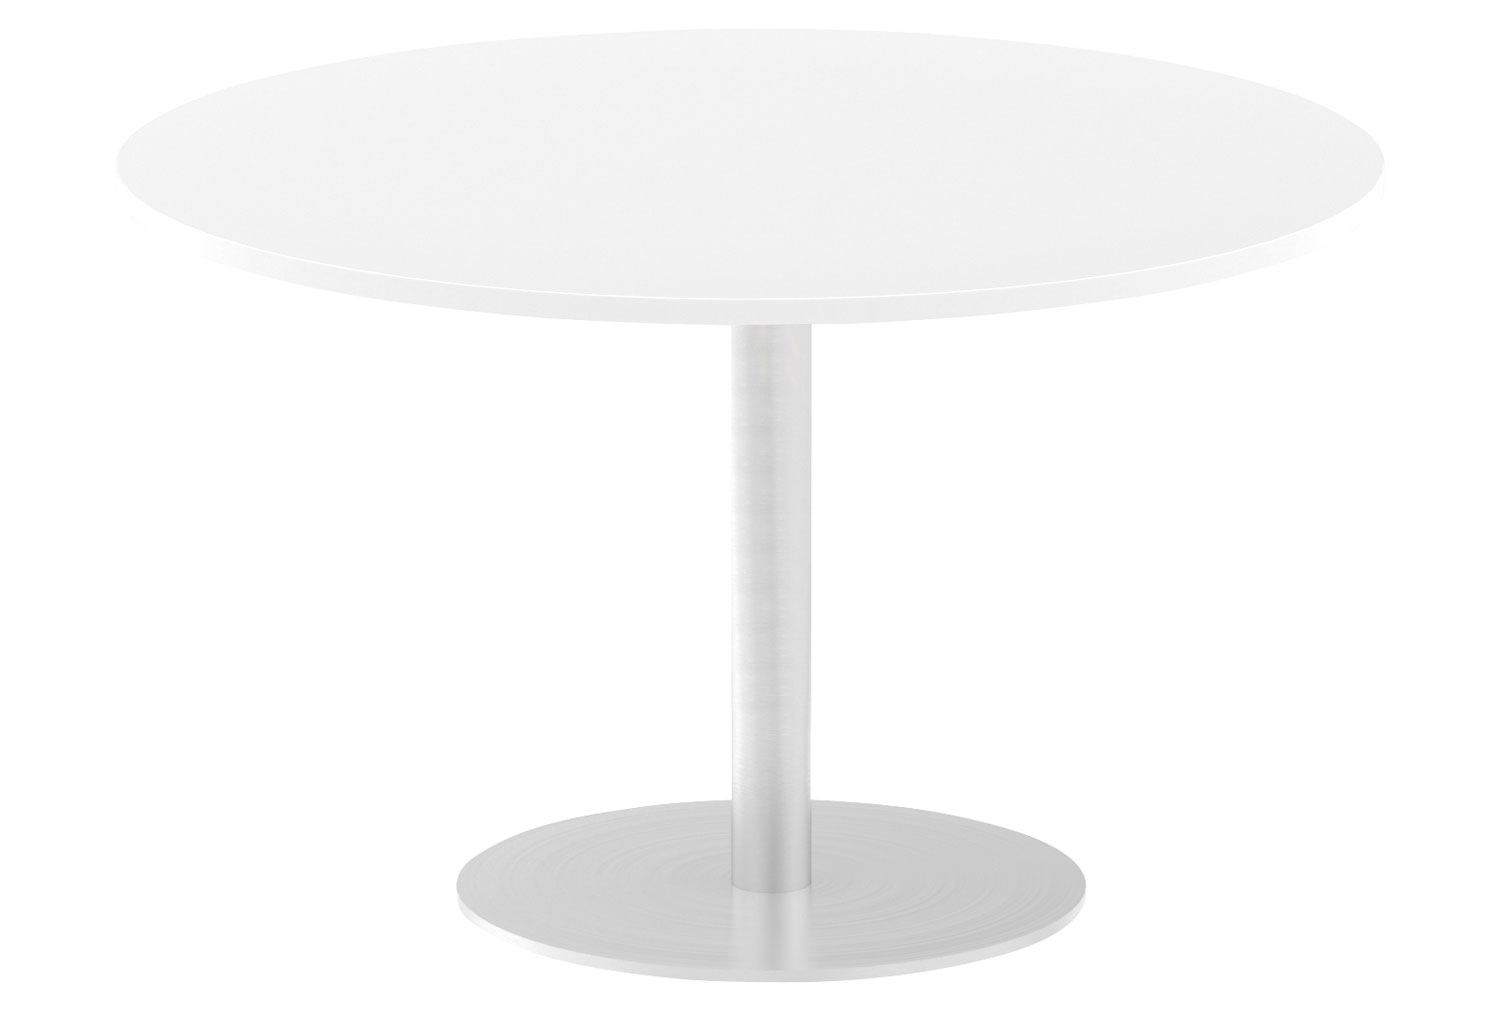 Vitali Radial Base Circular Dining Table, 100diax73h (cm), White